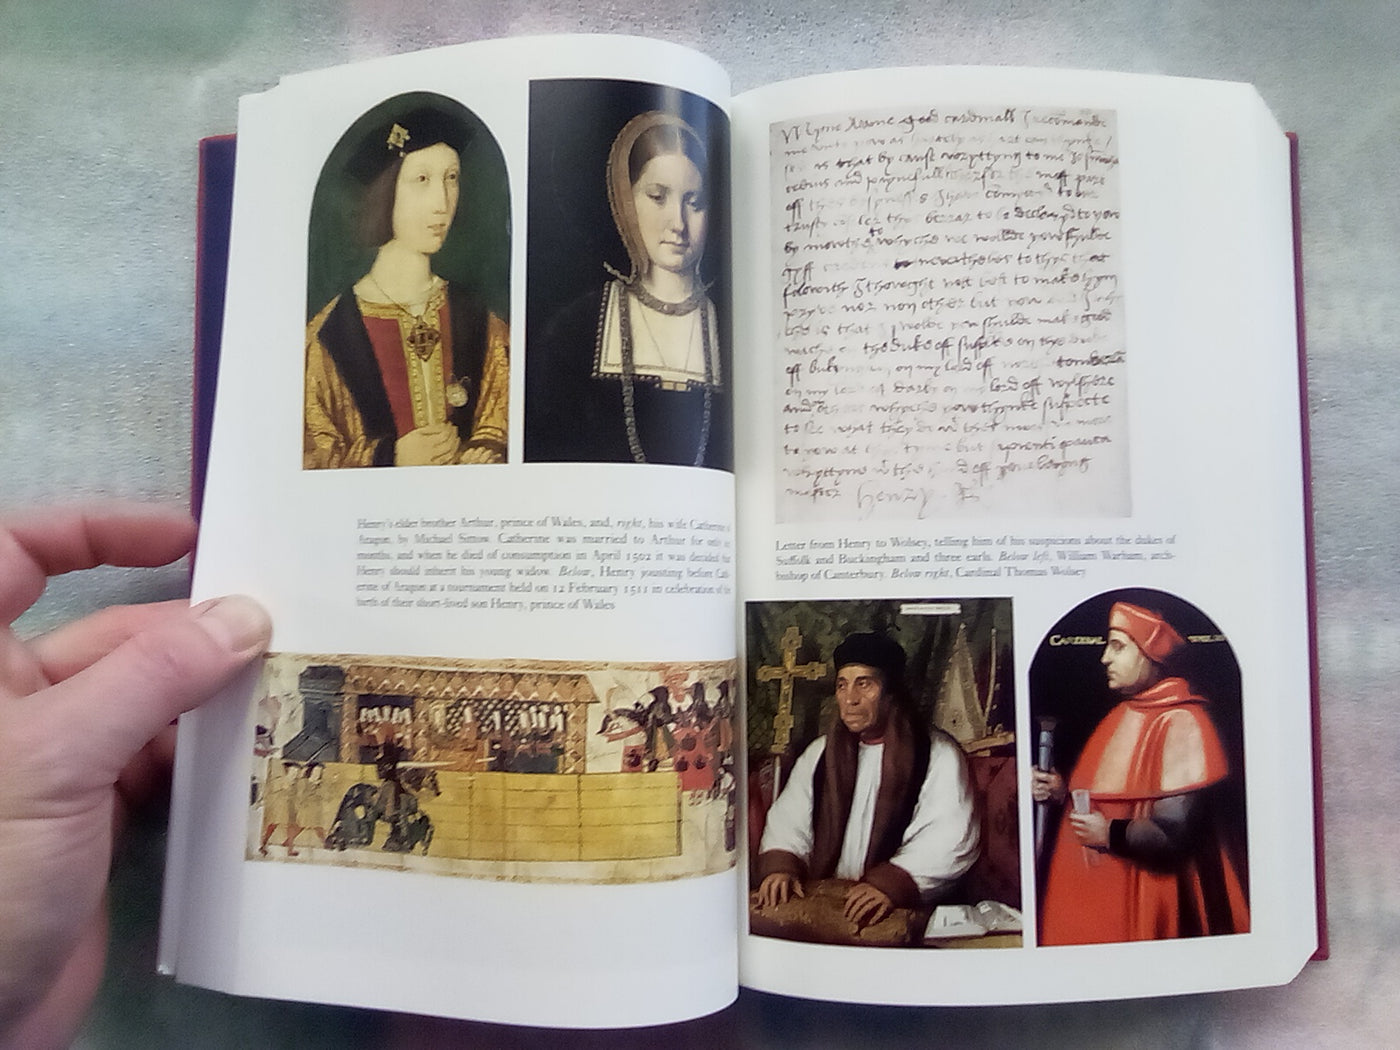 Folio Society - Henry VIII by J.J. Scarisbrick